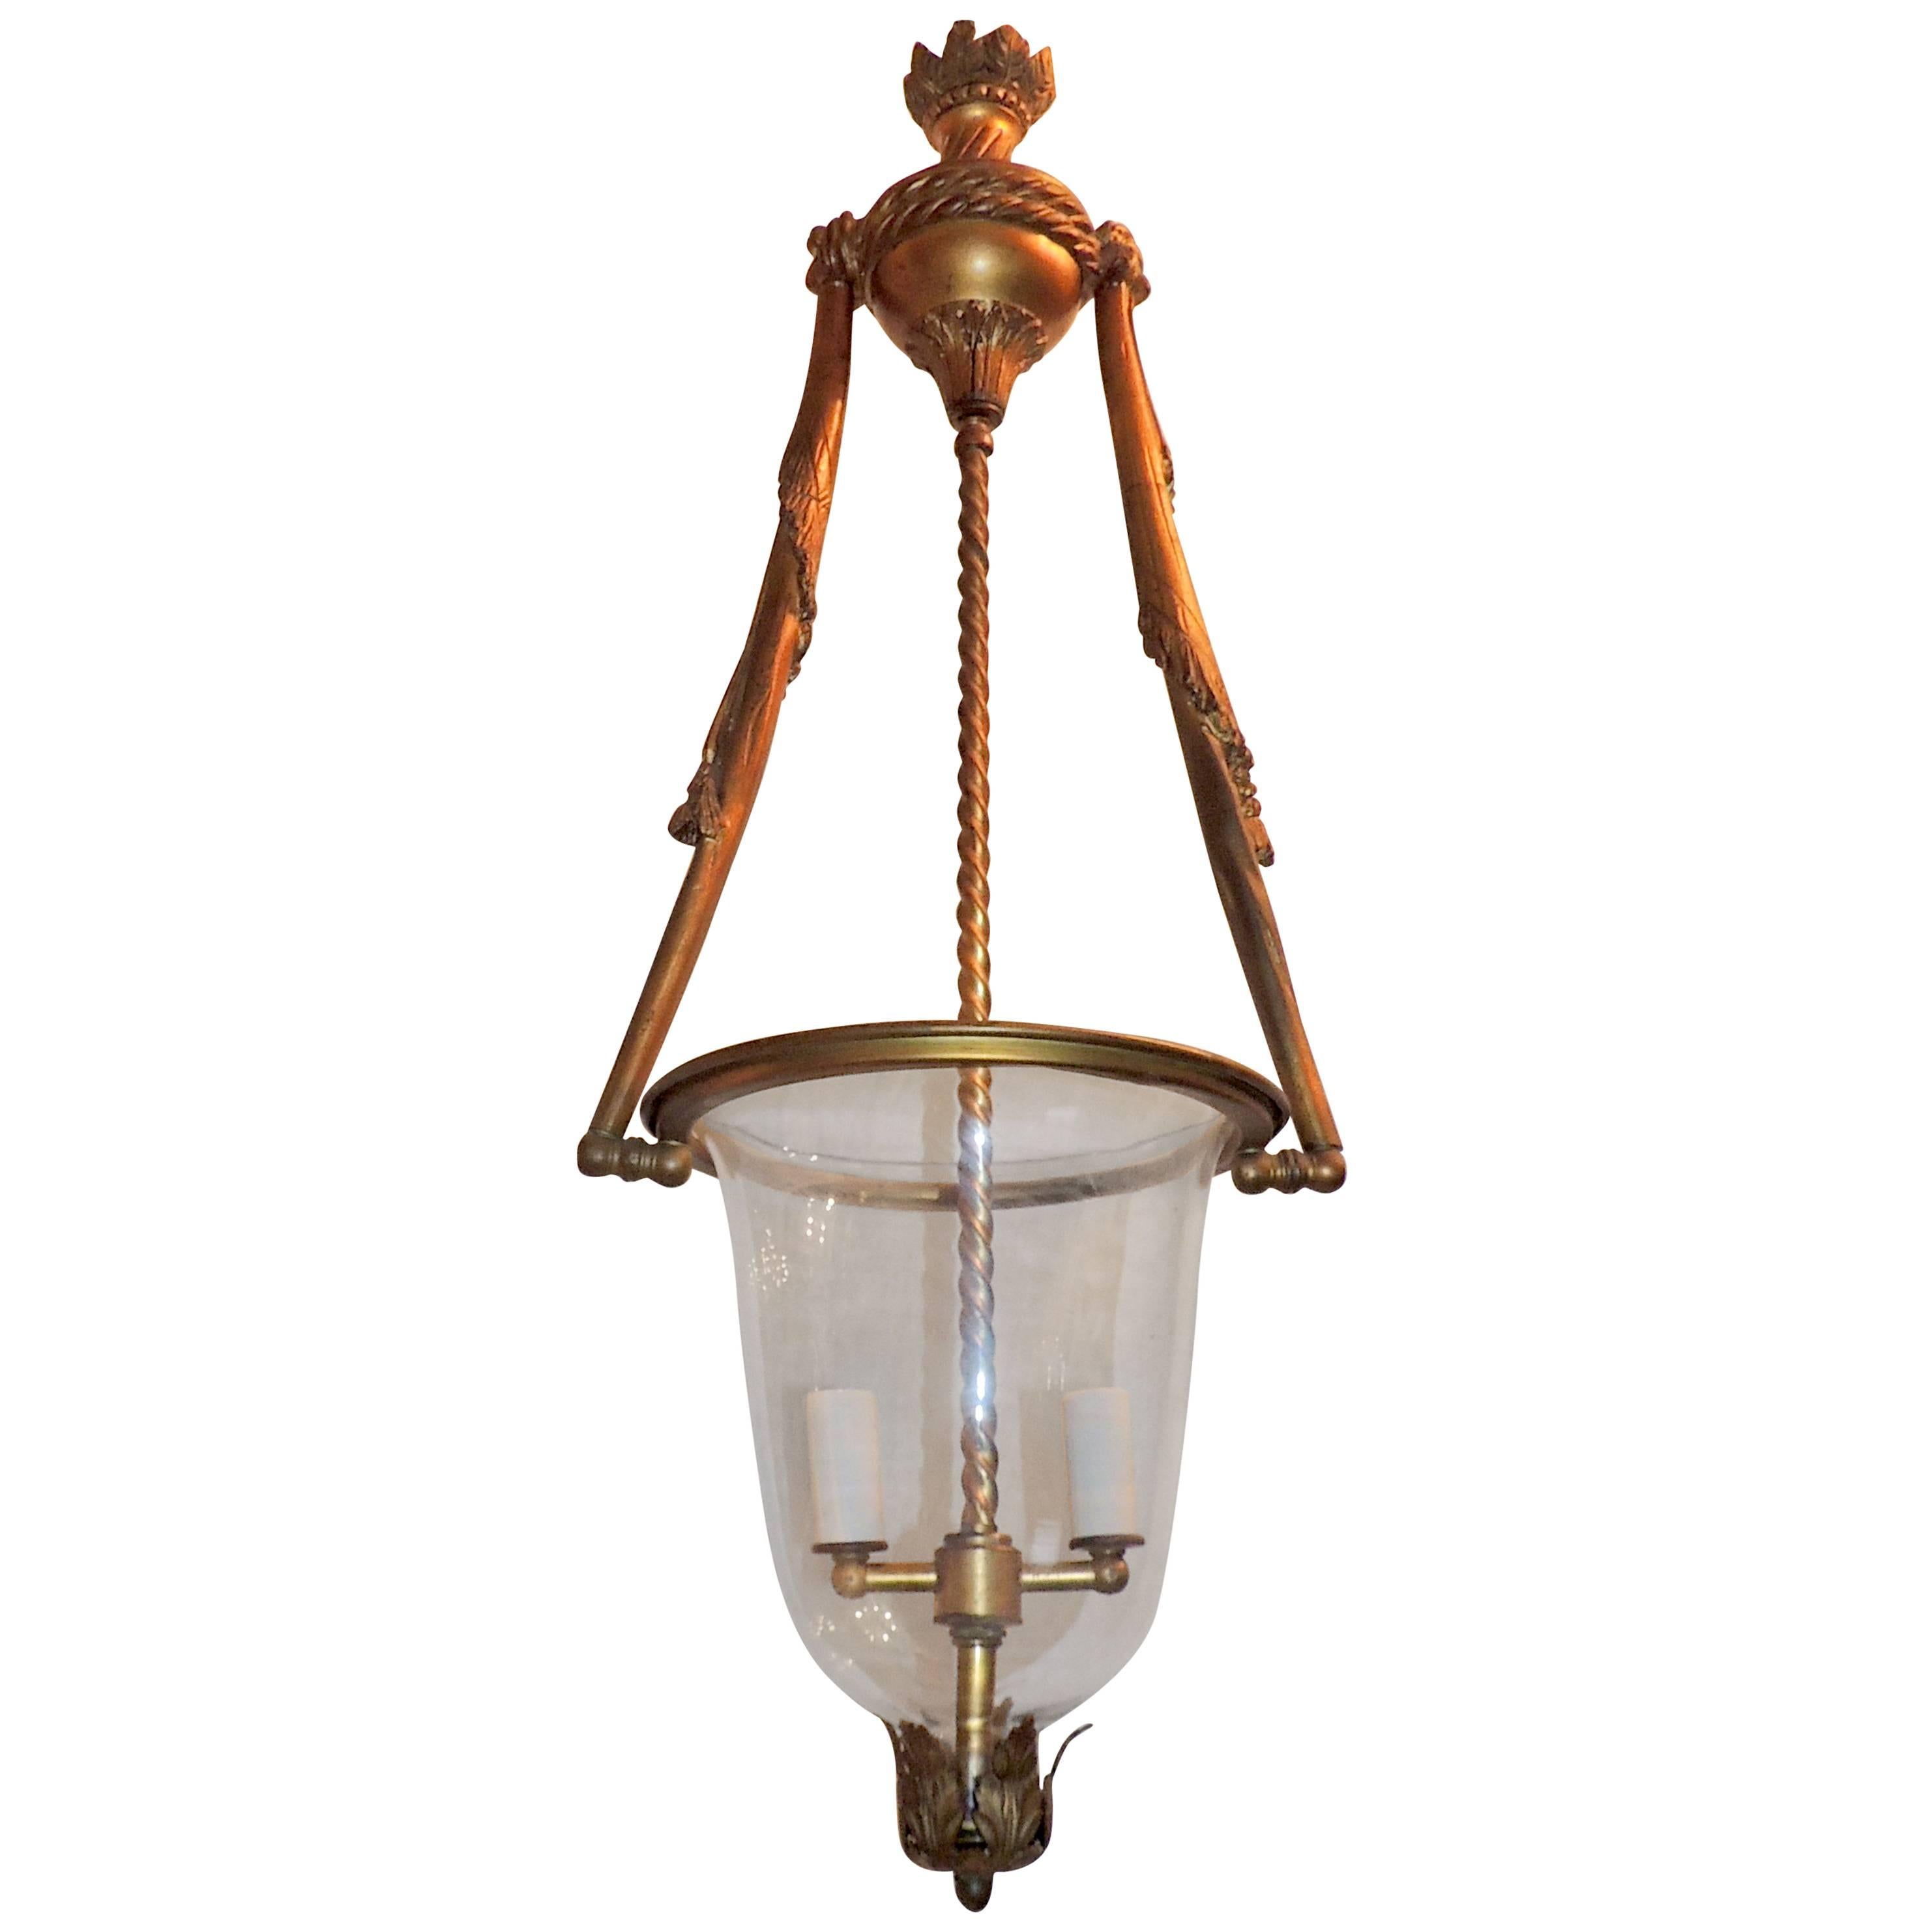 Wonderful French Bronze & Crystal Glass Bell Jar Tassel Lantern Fixture Pendent